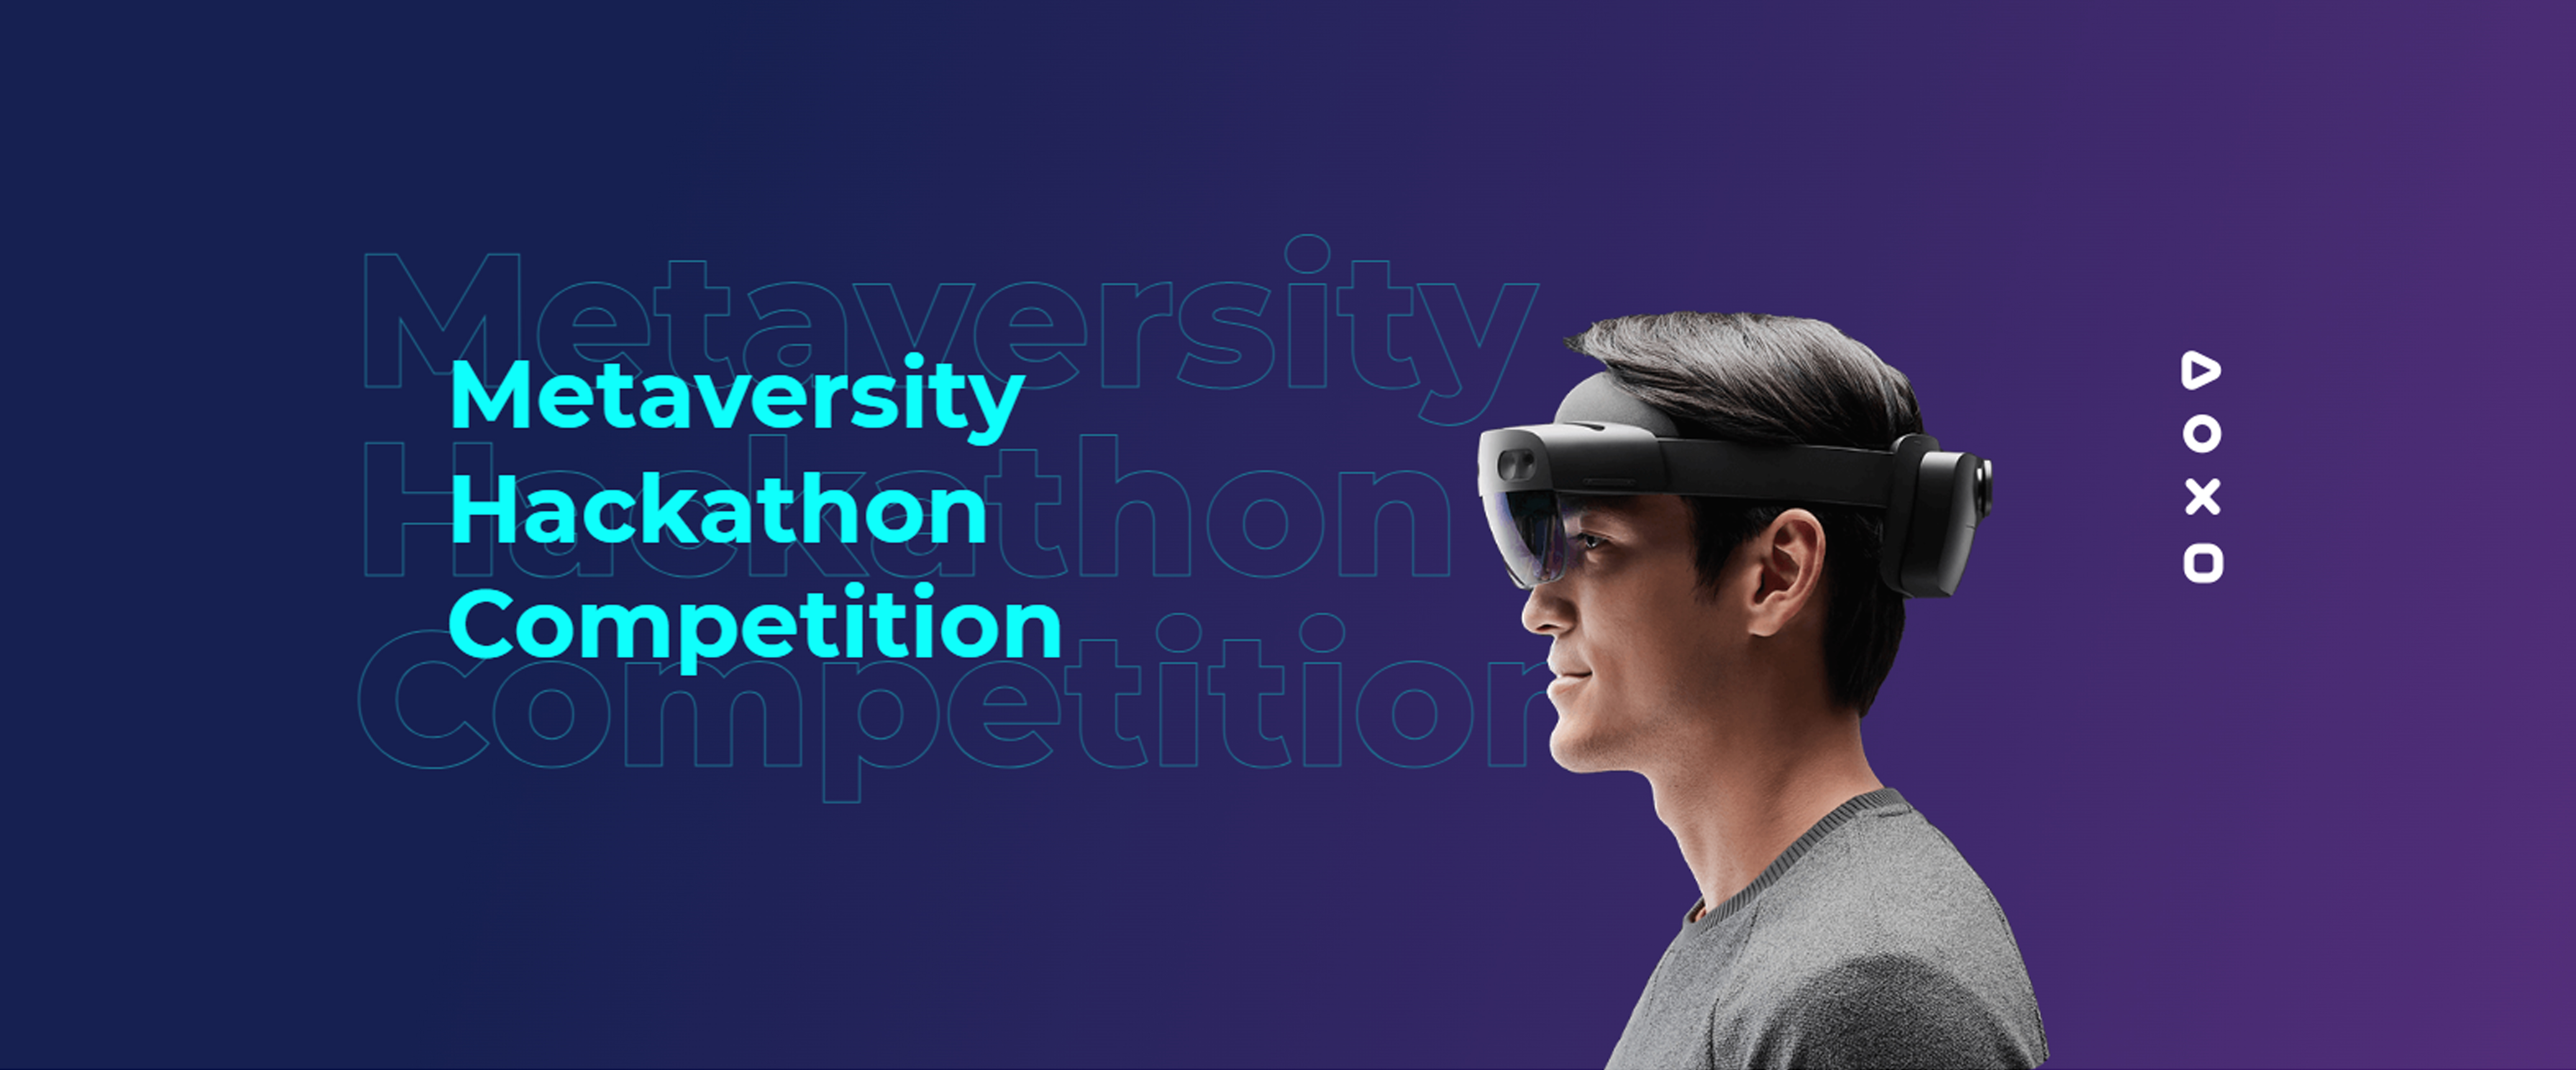 Metaversity Hackathon Competition